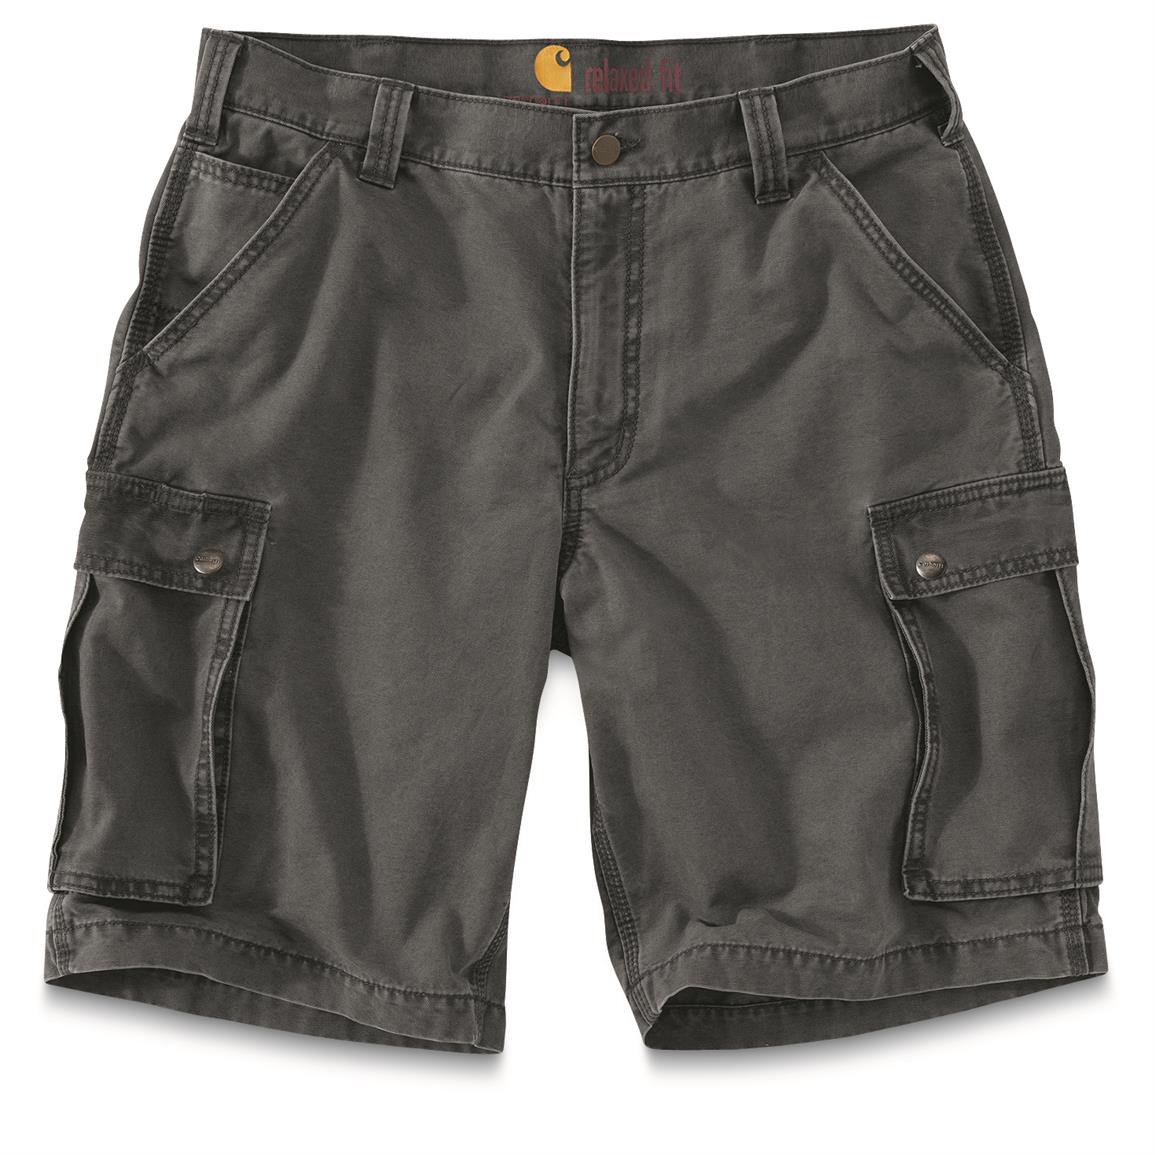 Carhartt Men's Rugged Cargo Shorts - 677686, Shorts at Sportsman's Guide